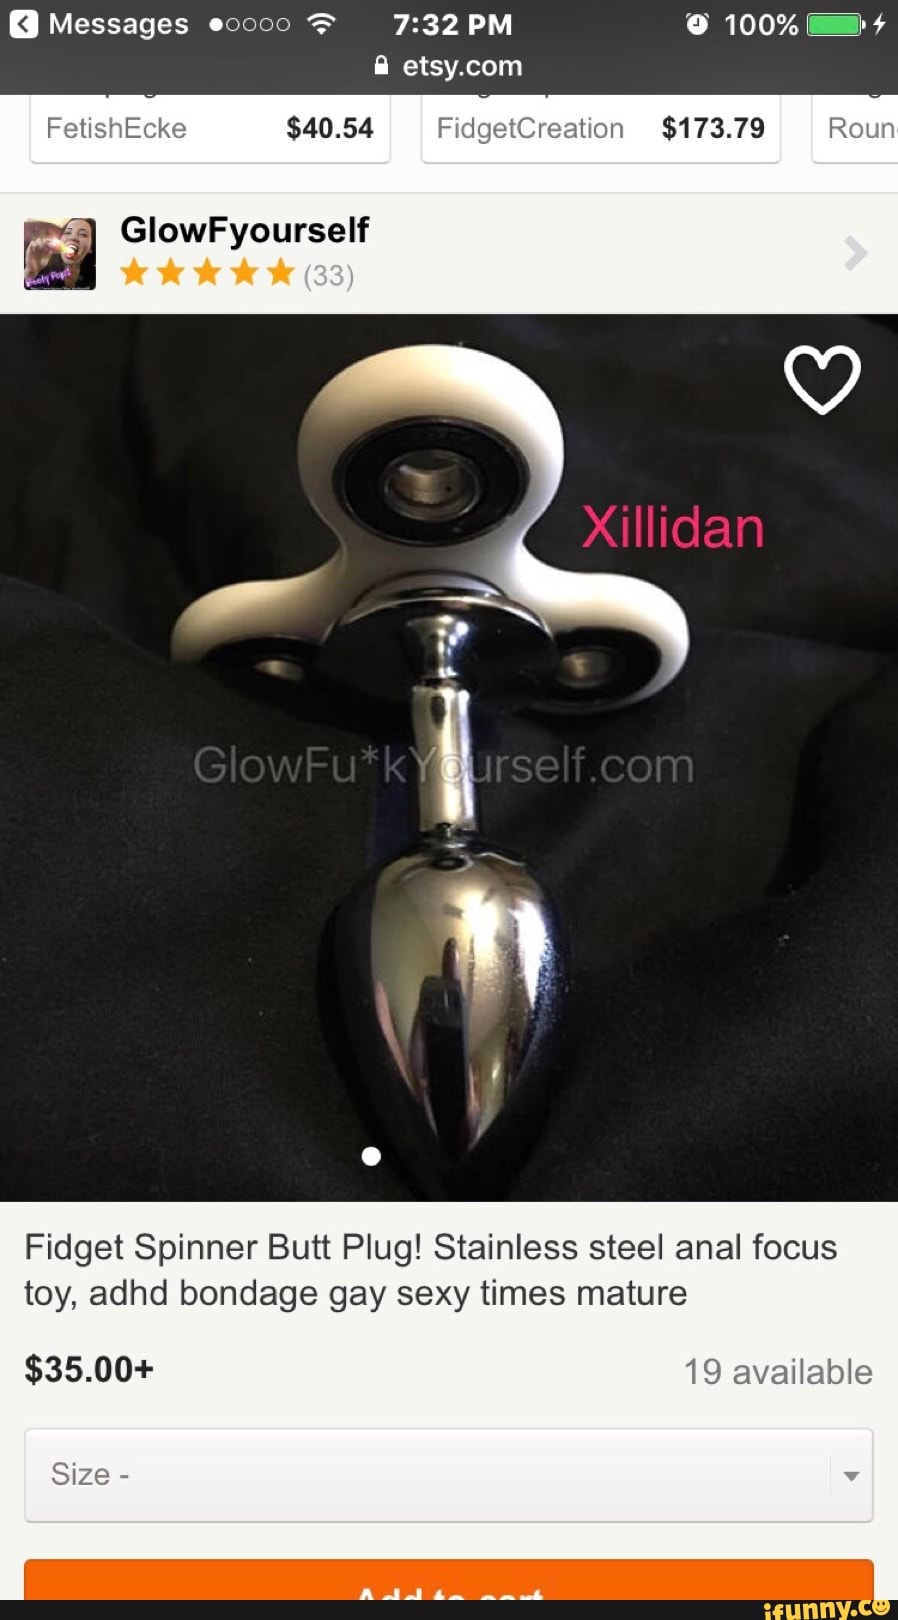 Fidget spinner butt